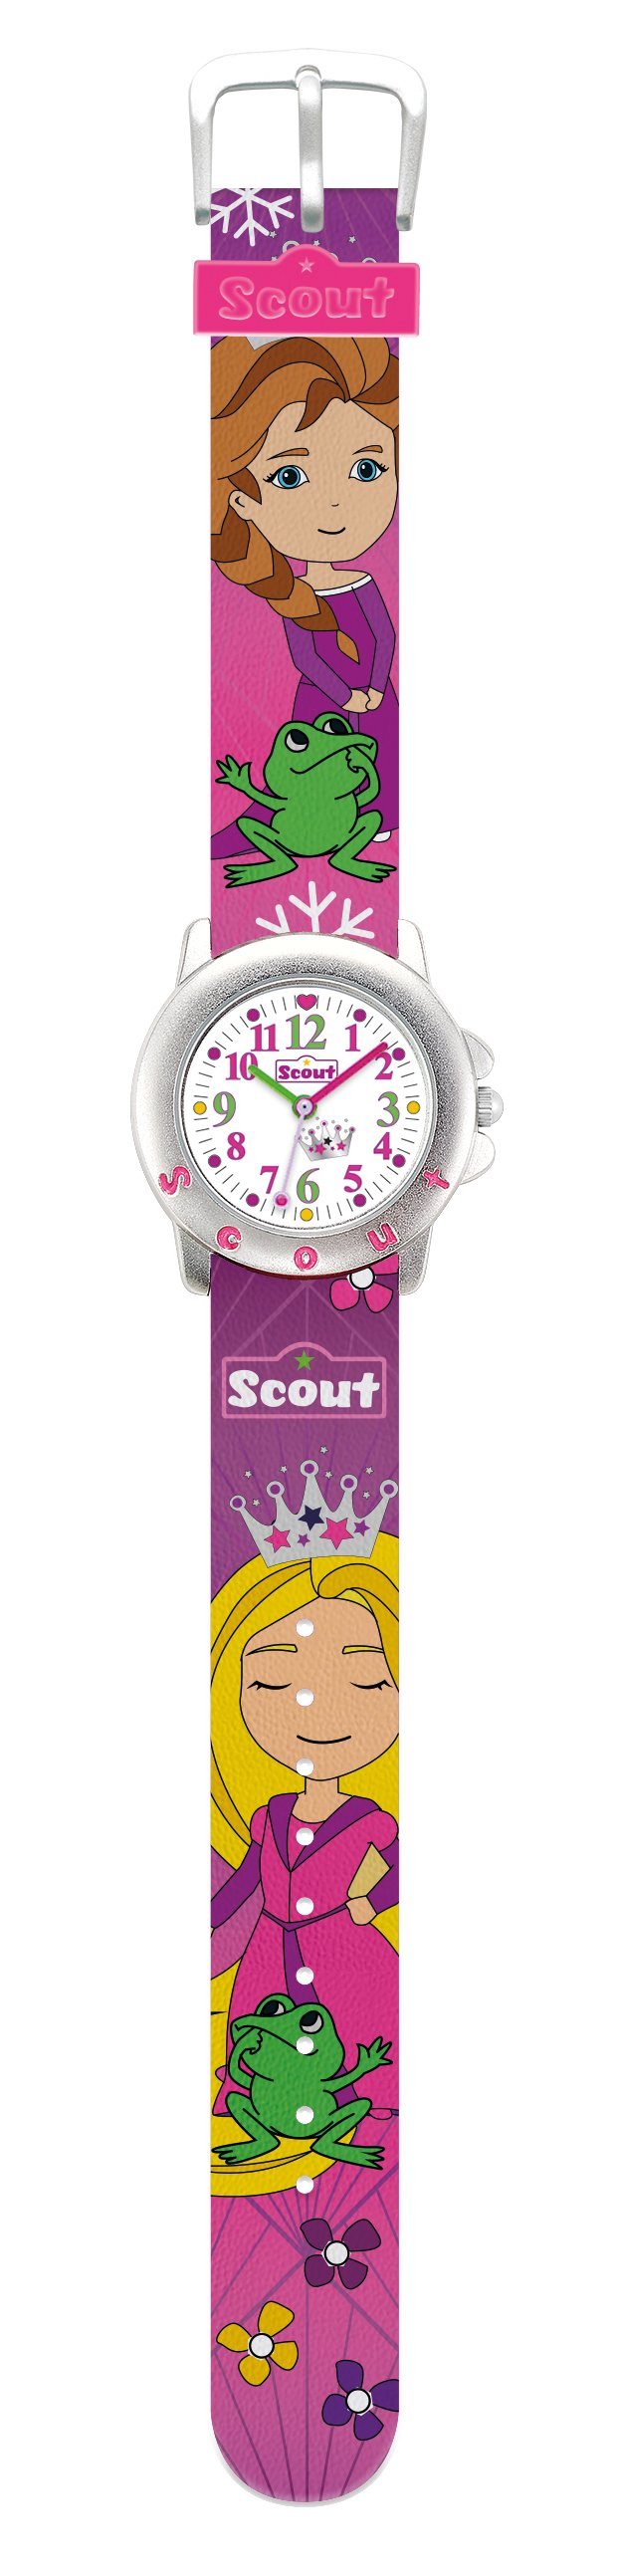 Scout Armbanduhr Star Kids 280393037 Prinzessinen Kinder Quarzuhr